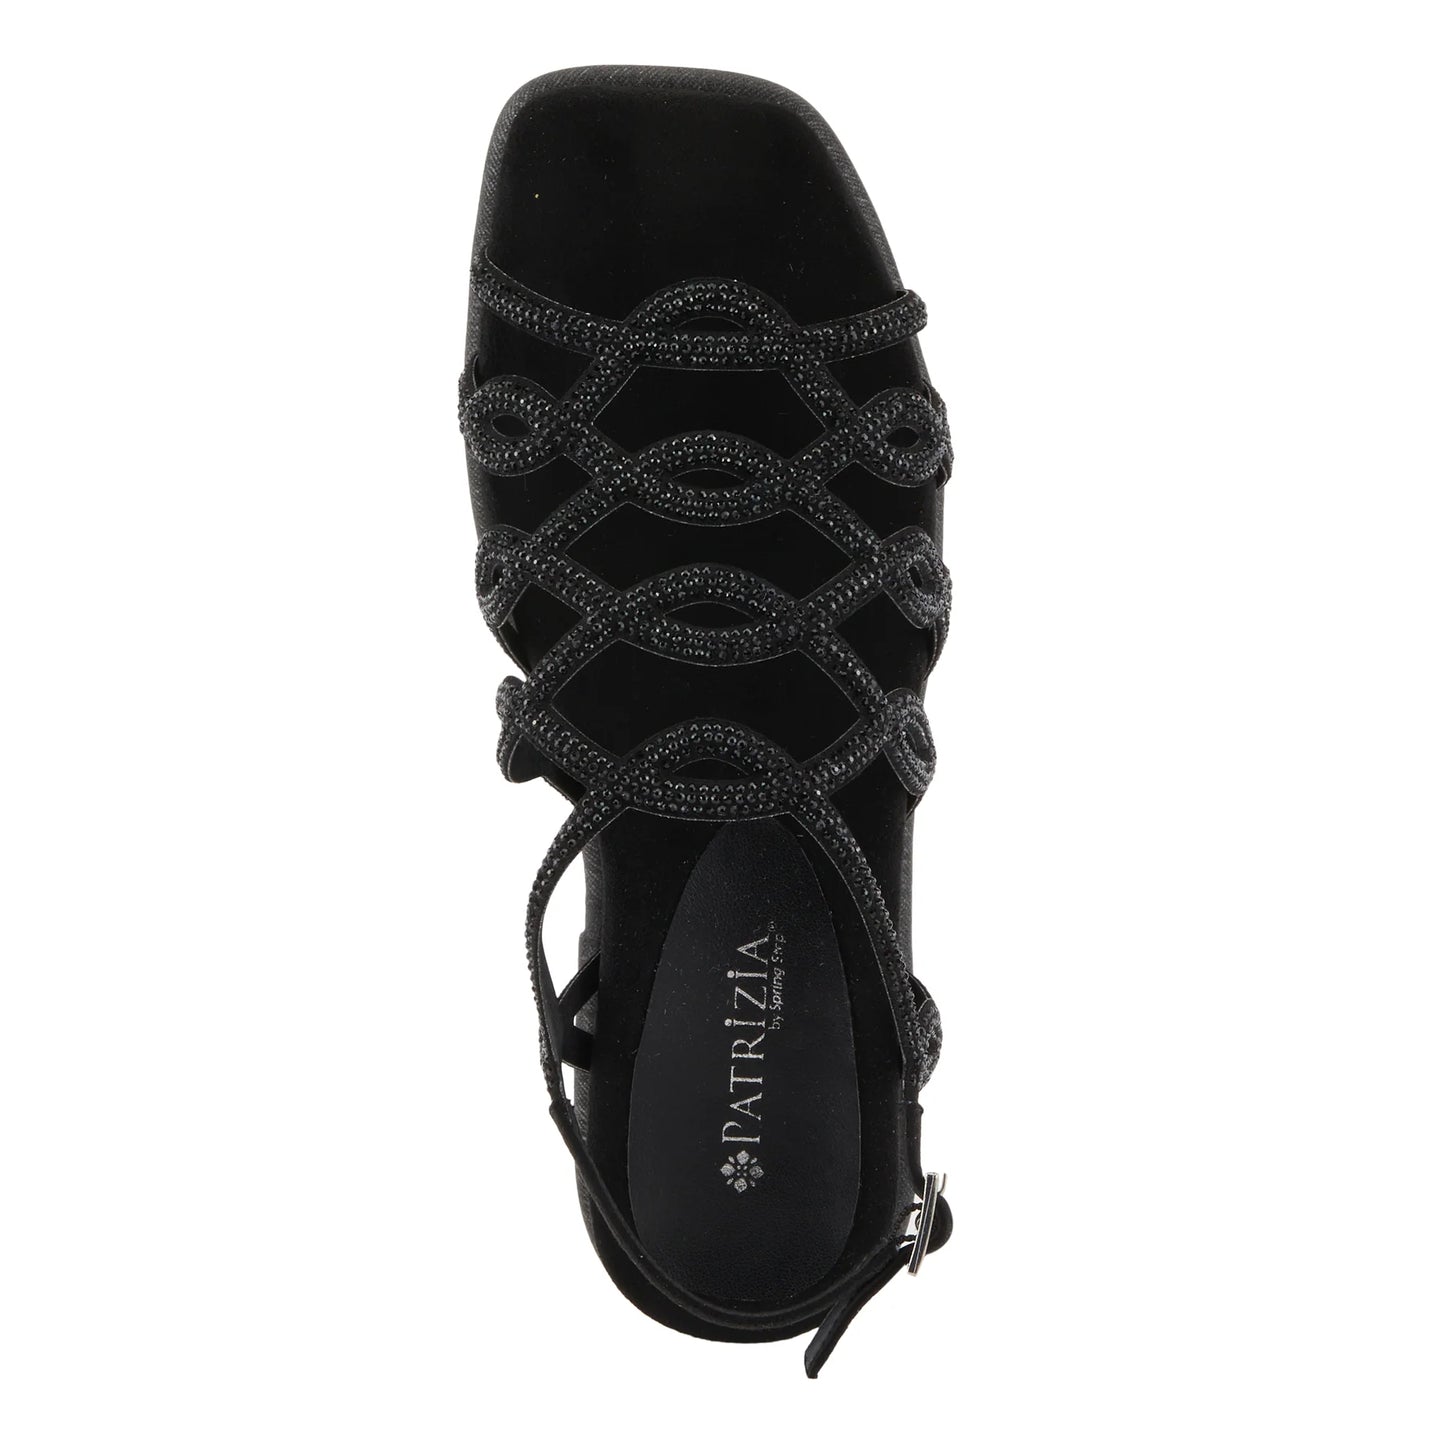 Patrizia by Spring Step Women's Glamgloss Sandals - Black